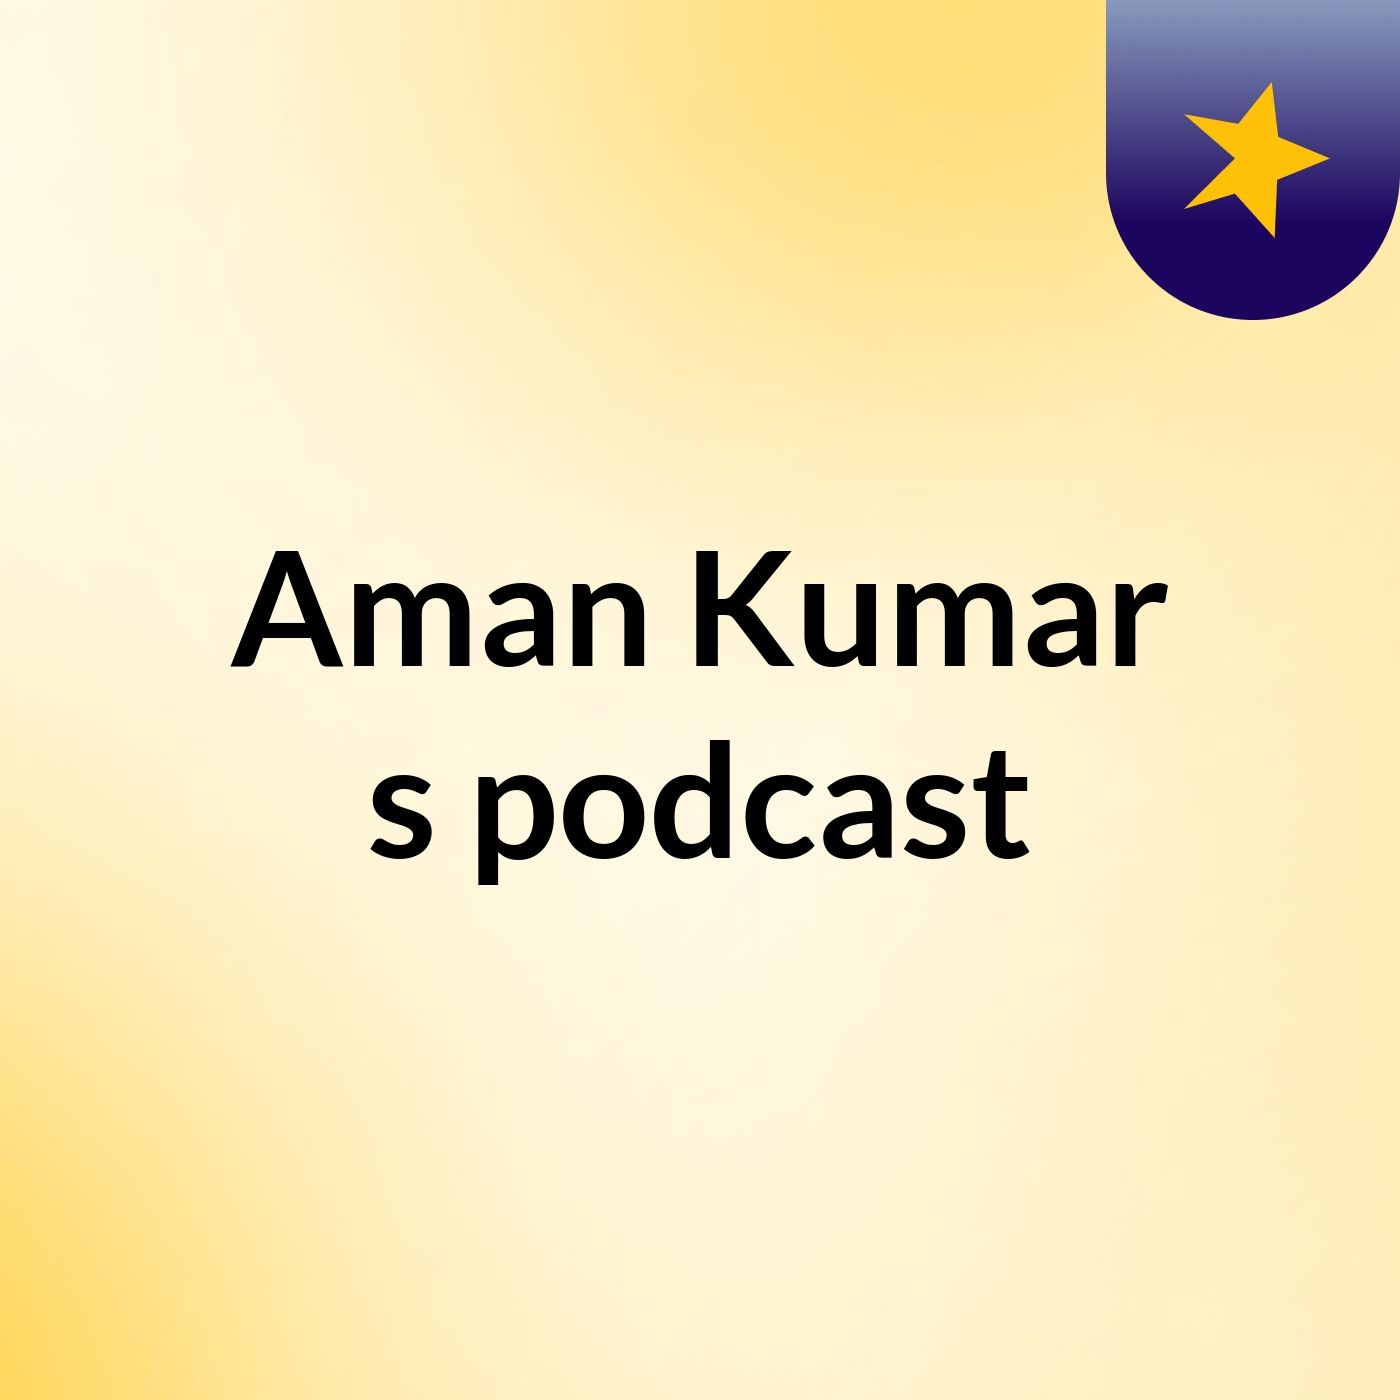 Episode 6 - Aman Kumar's podcast